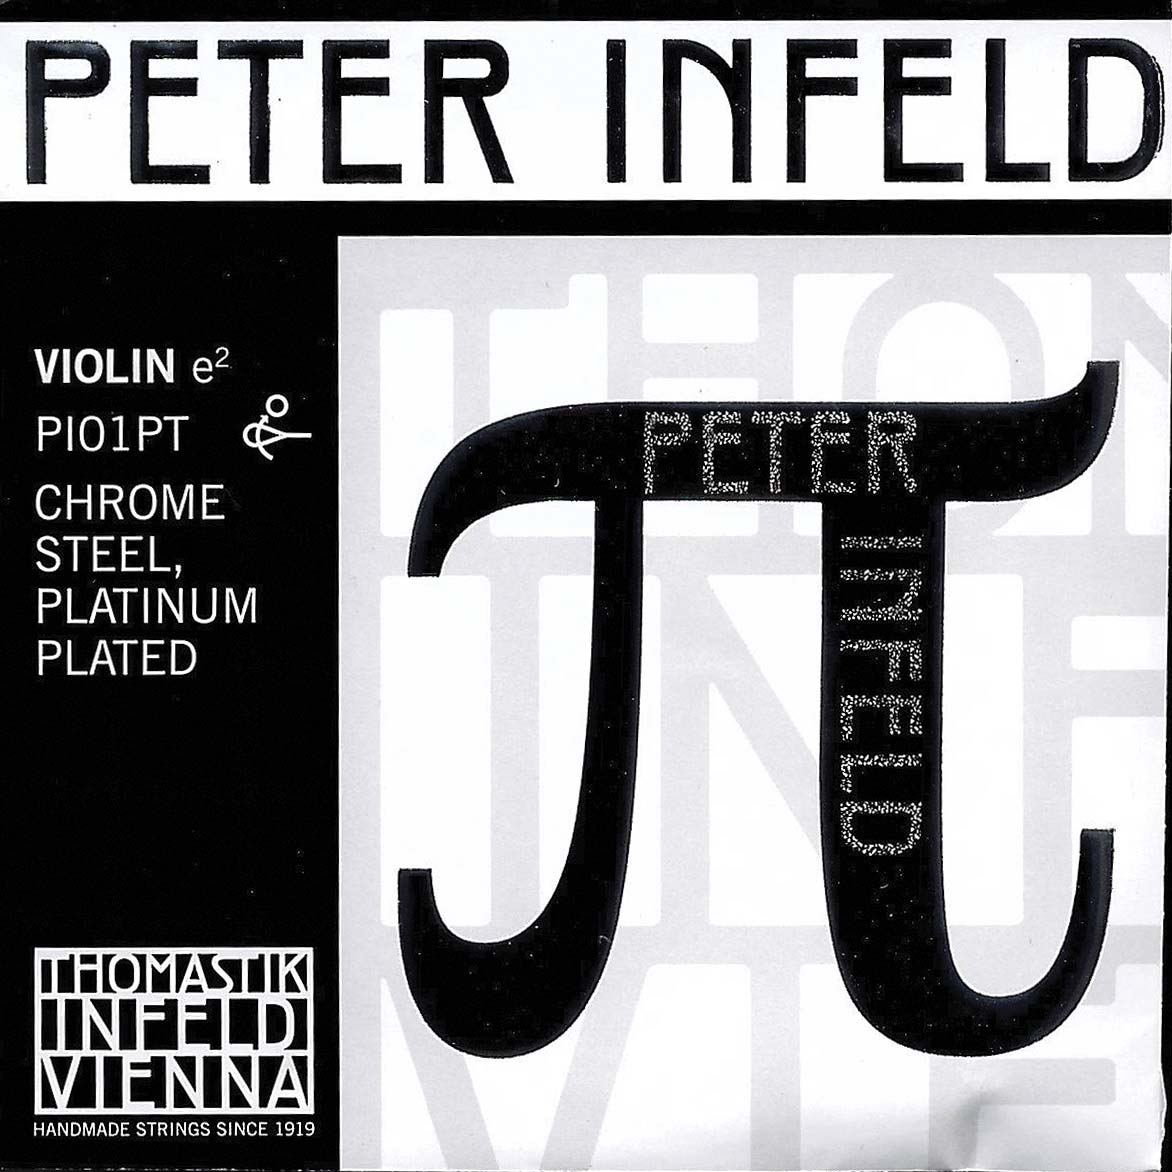 Peter Infeld Violin E - platinum-plated/chromestl.: Me